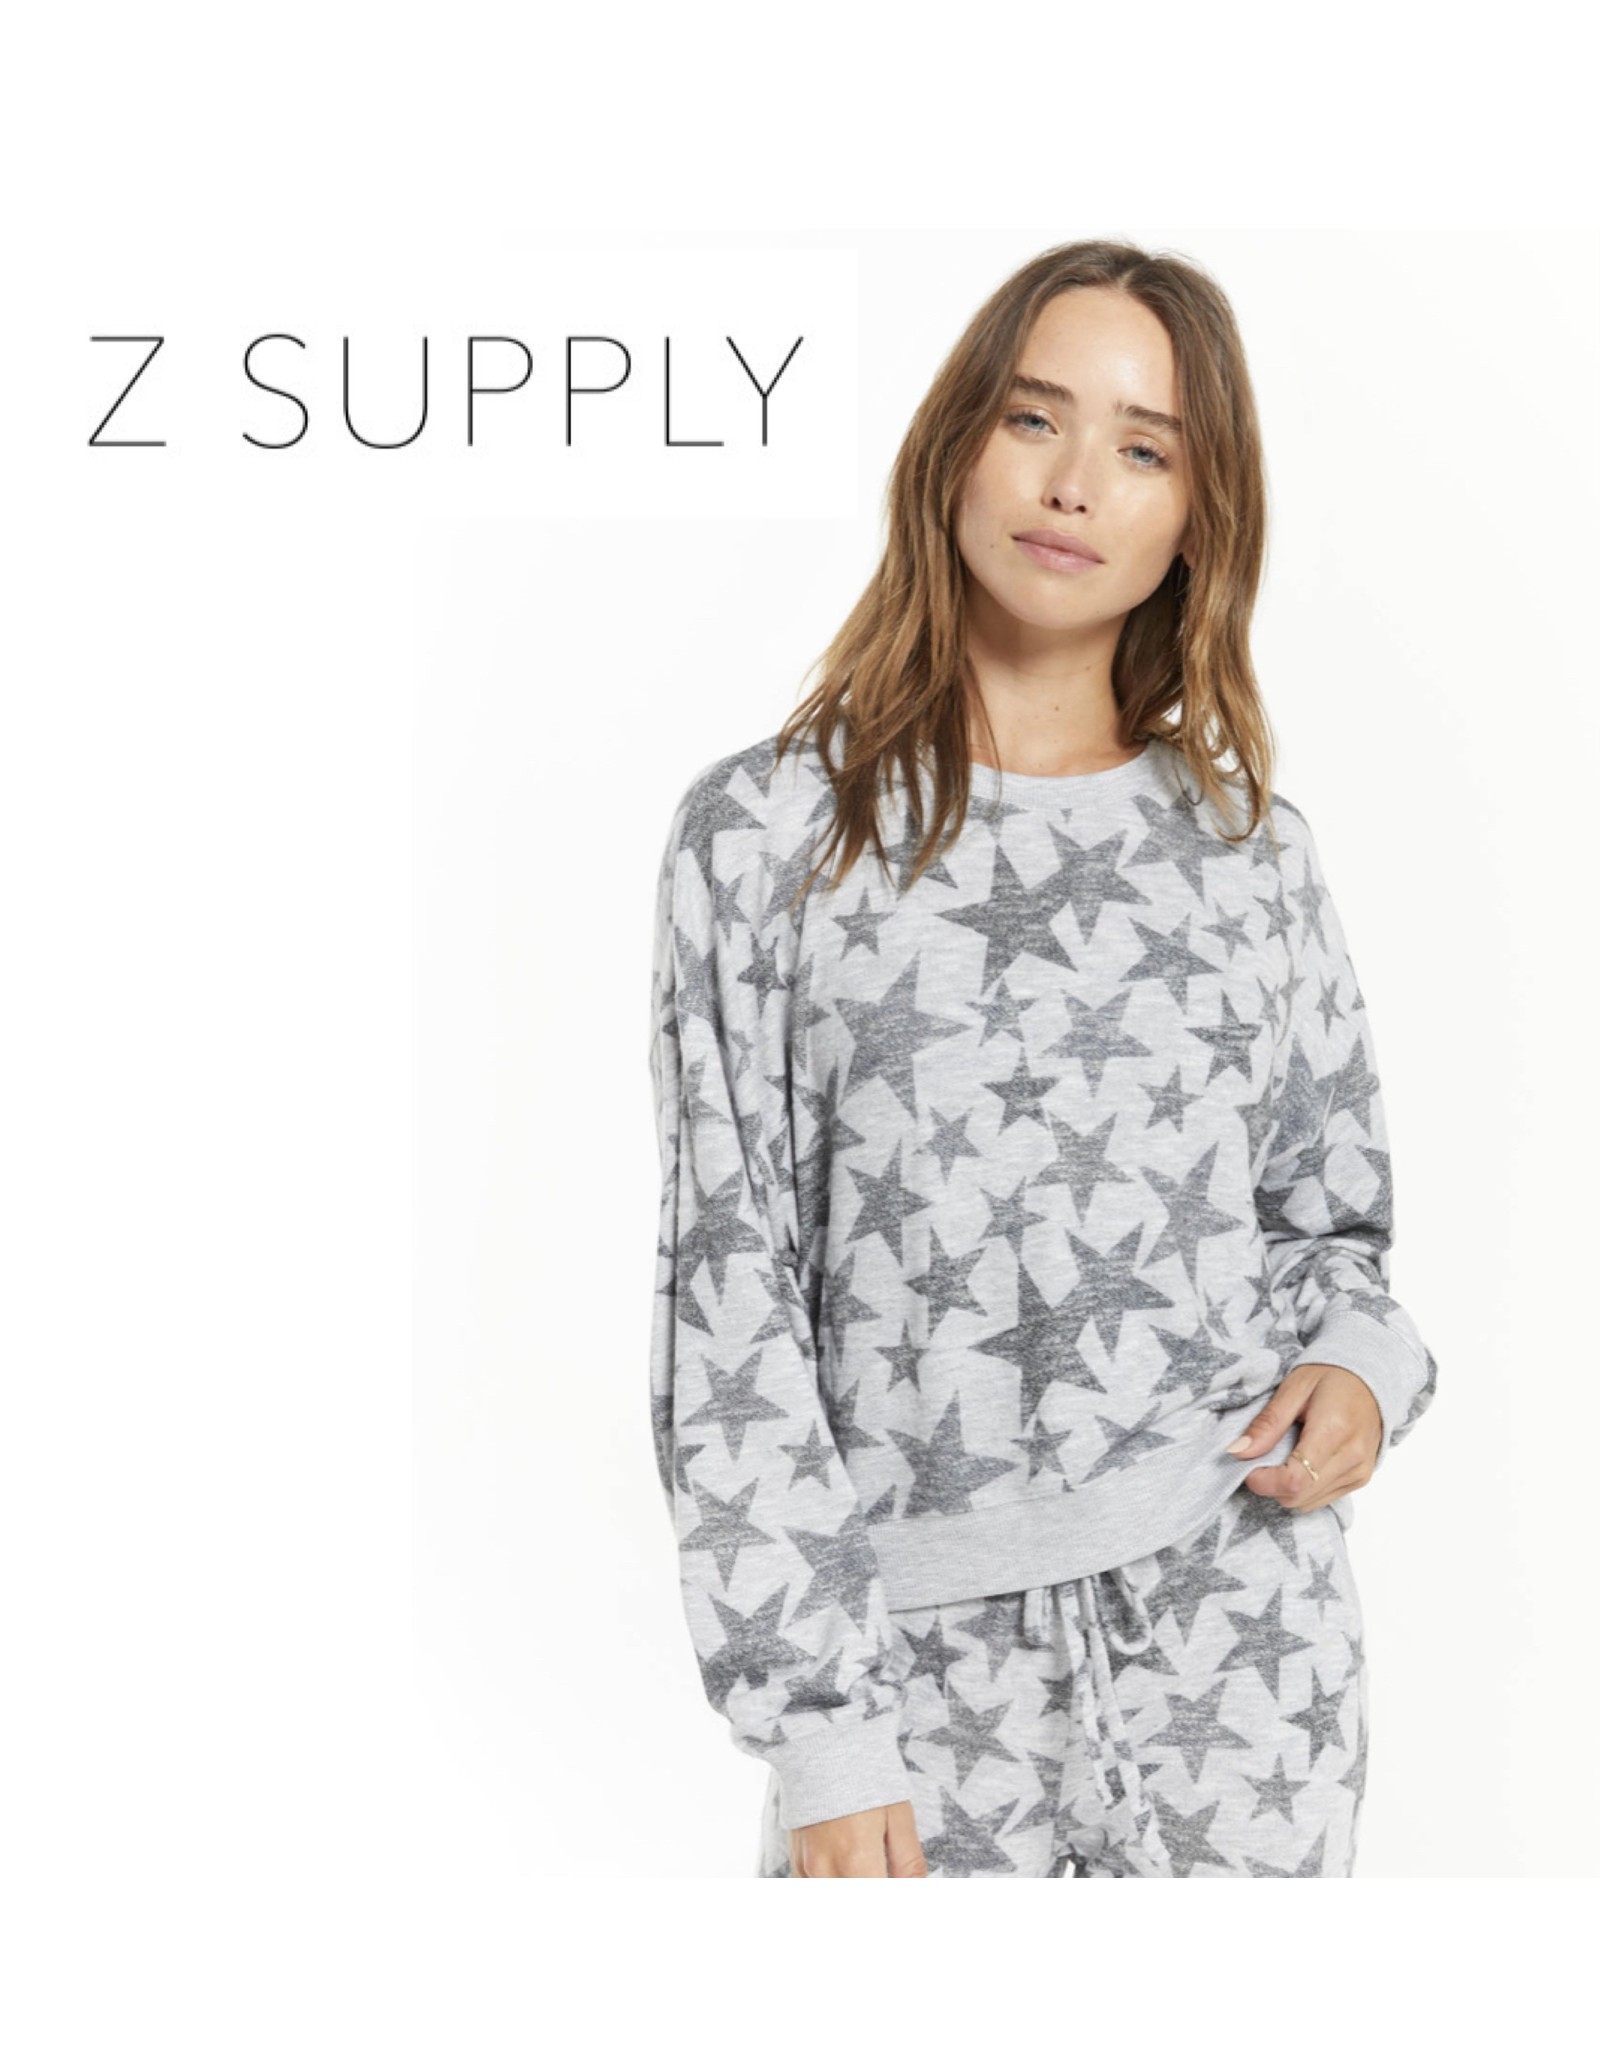 Z Supply Z SUPPLY Melia Camo Star Slub Top